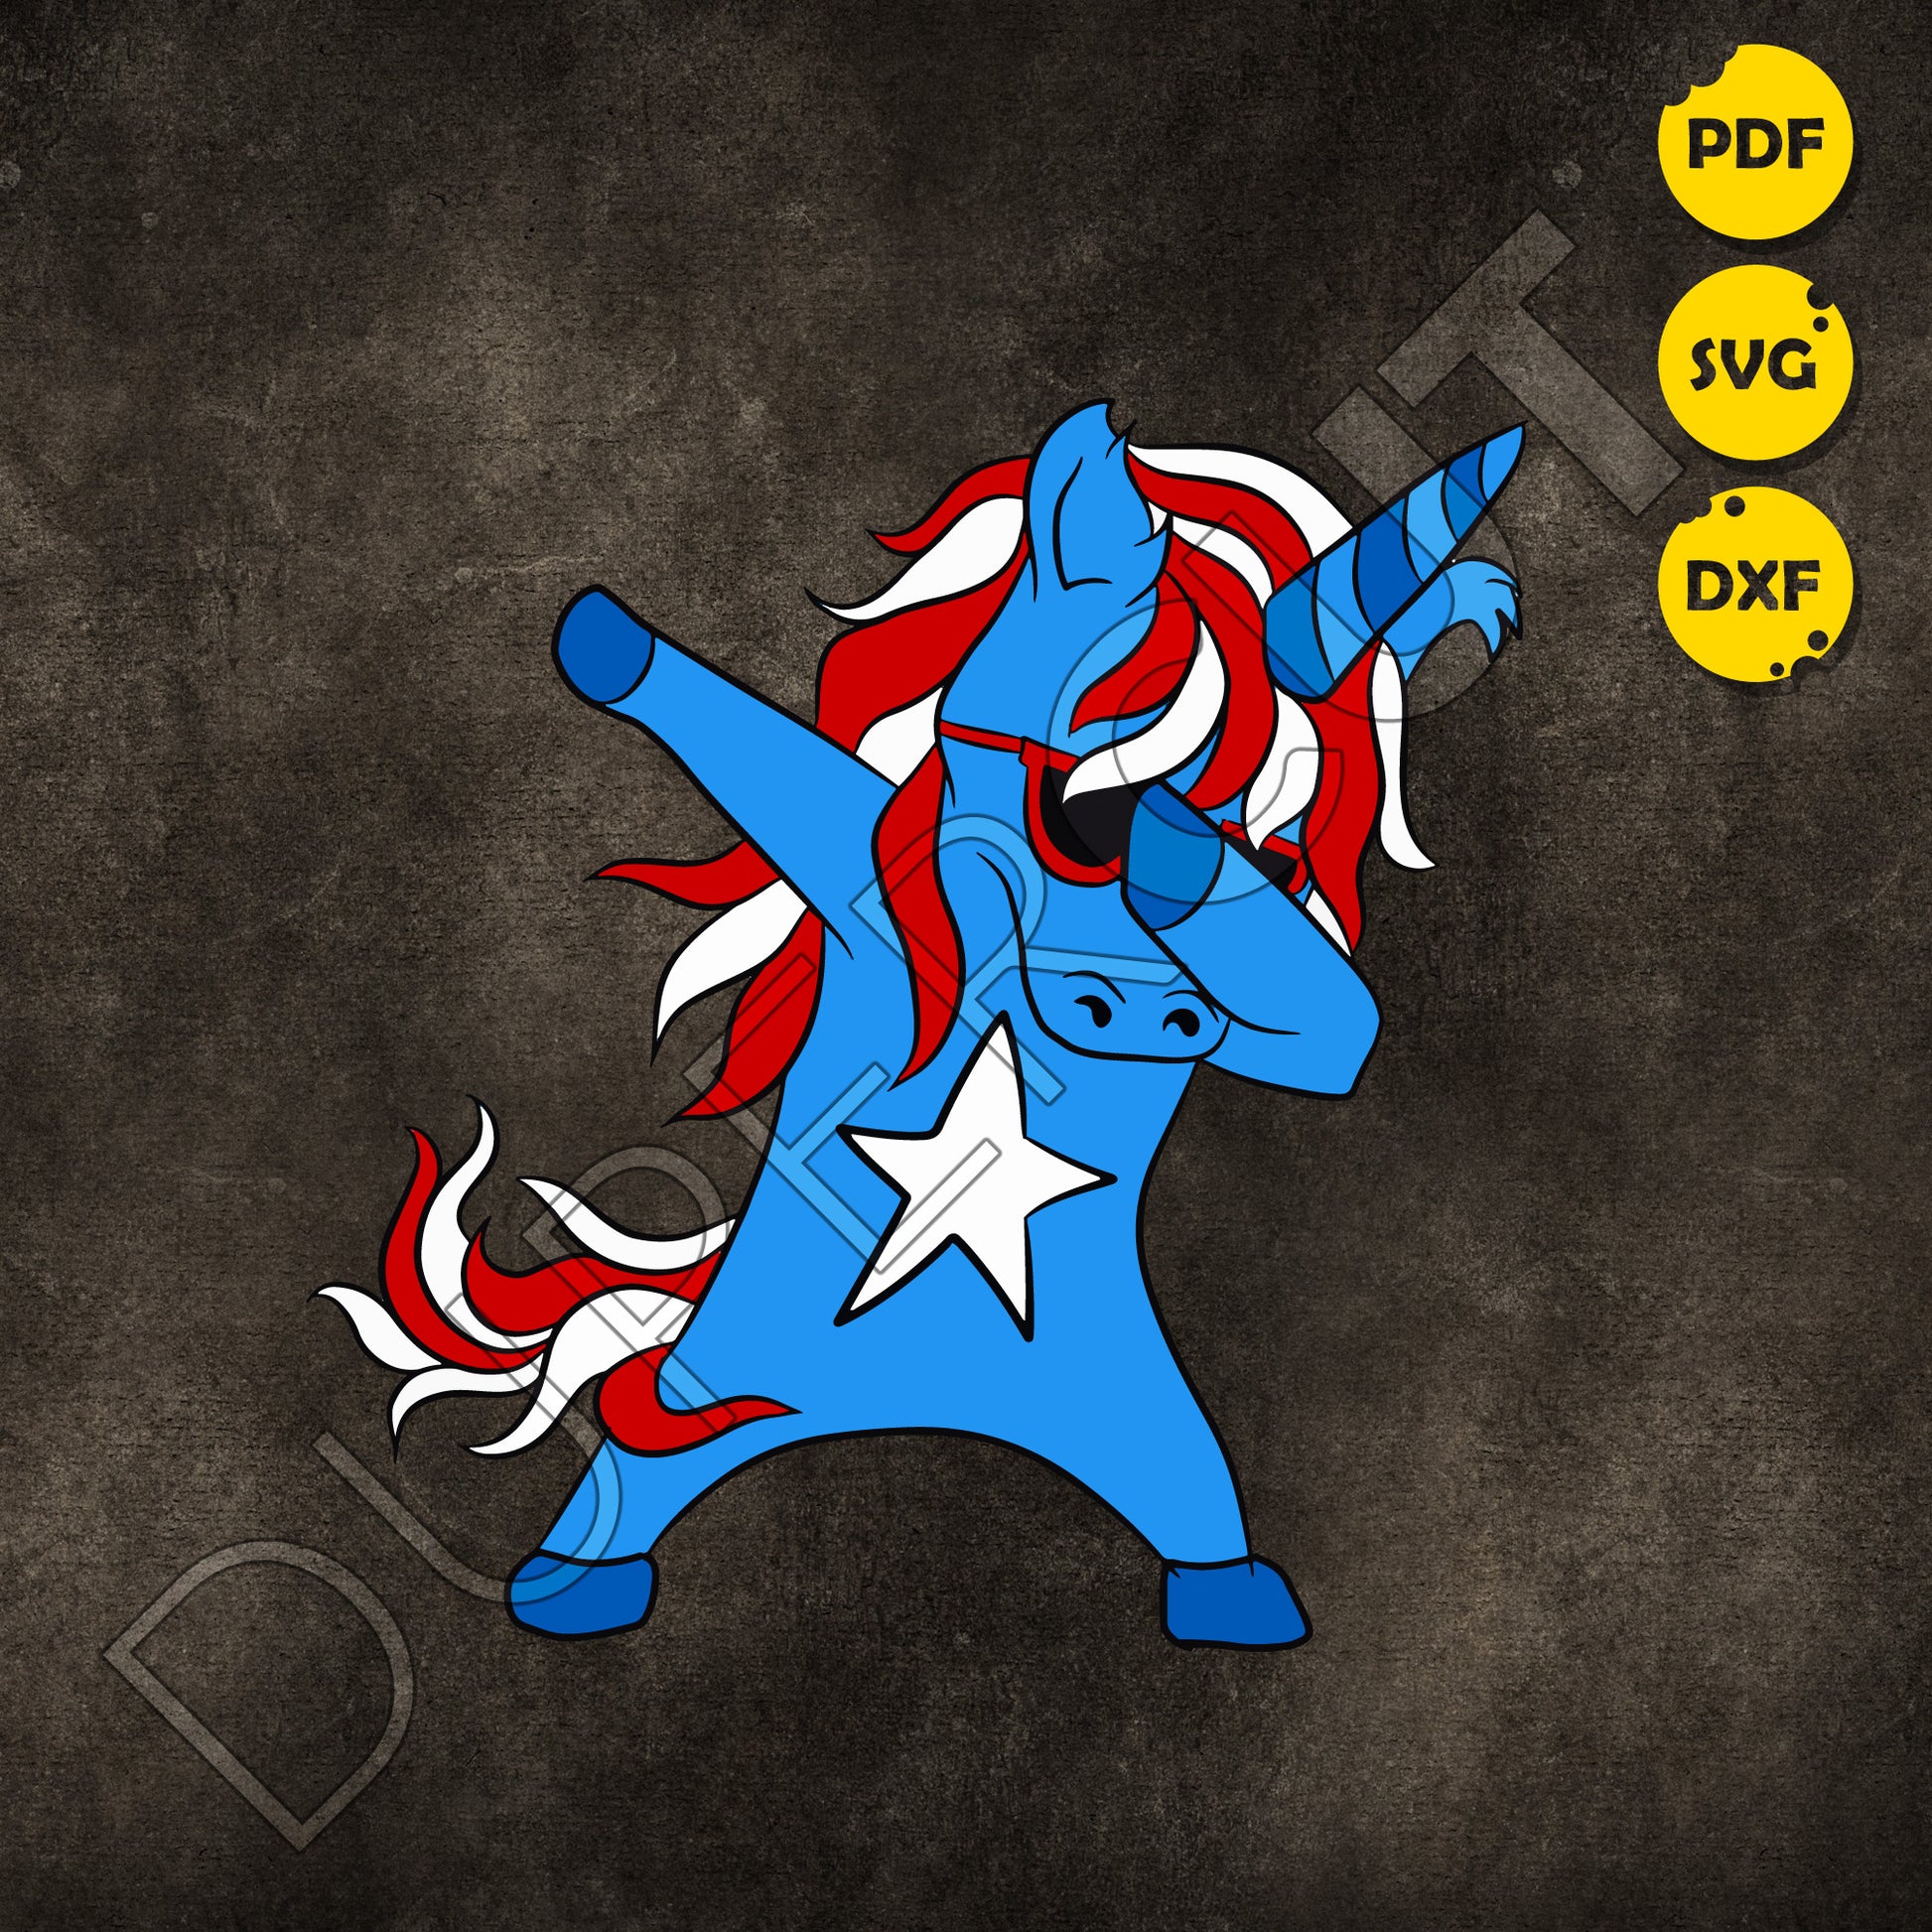 SVG PNG DXF file - American Dabbing Unicorn